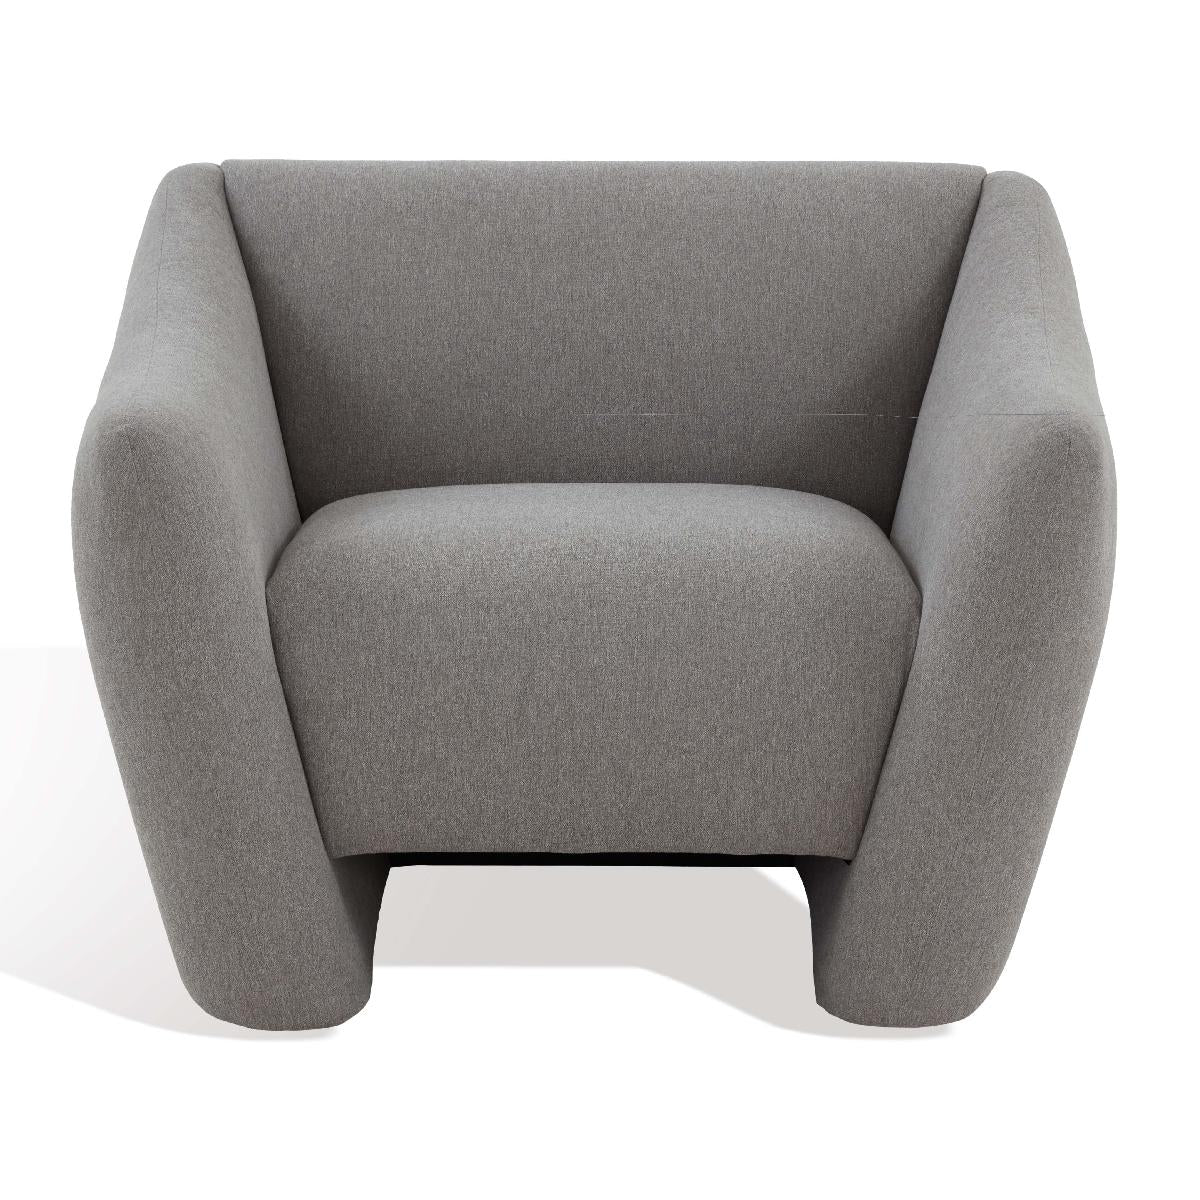 Safavieh Couture Stefanie Modern Accent Chair - Light Grey